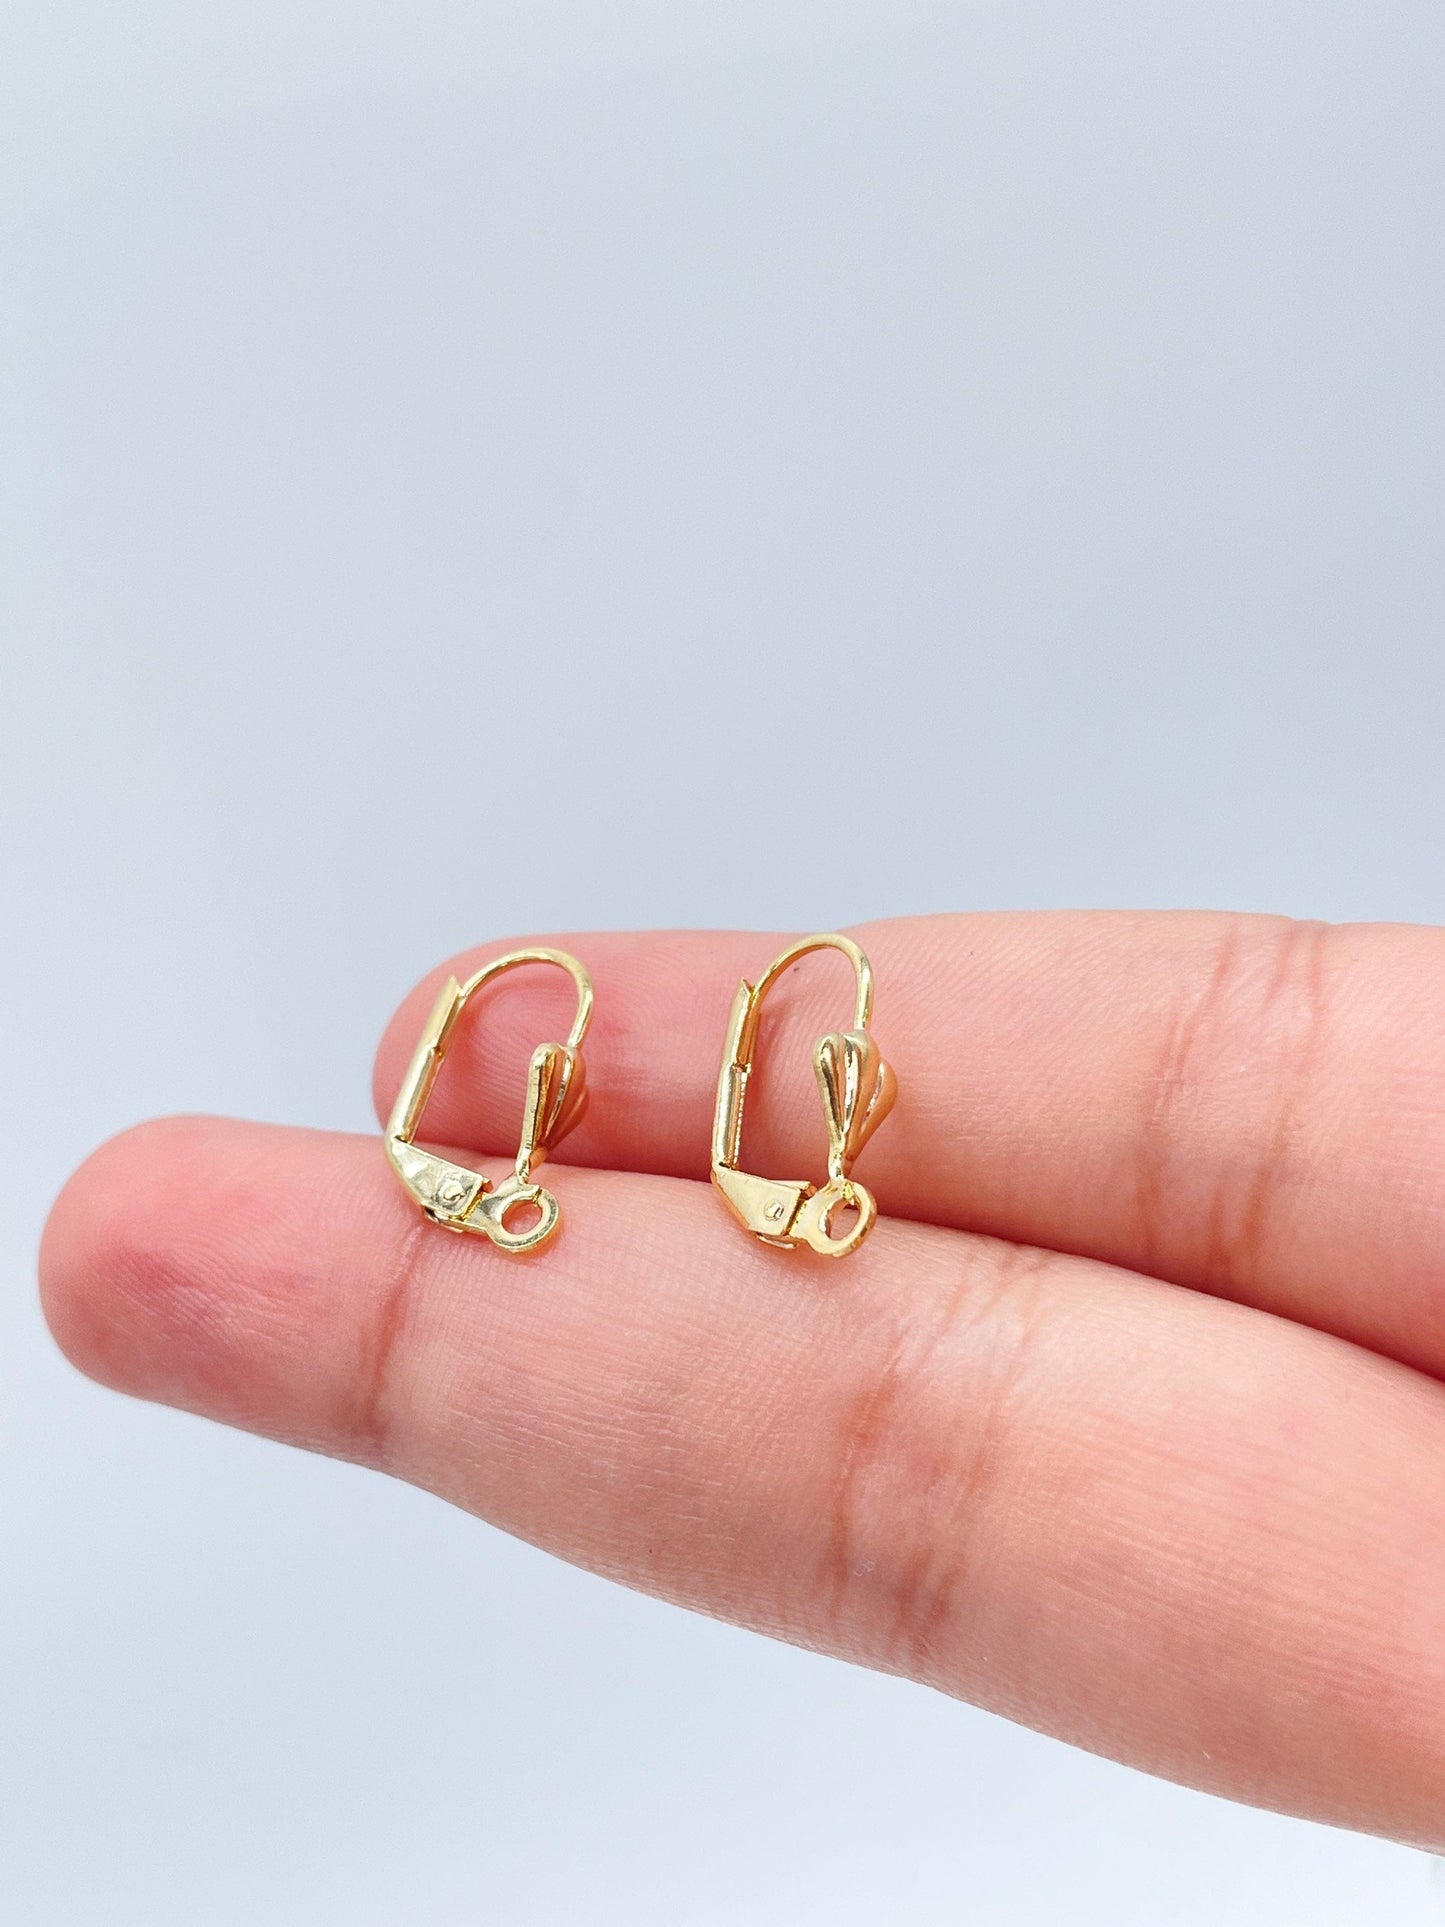 Lever Backs for Earrings, Wholesale Jewelry Findings